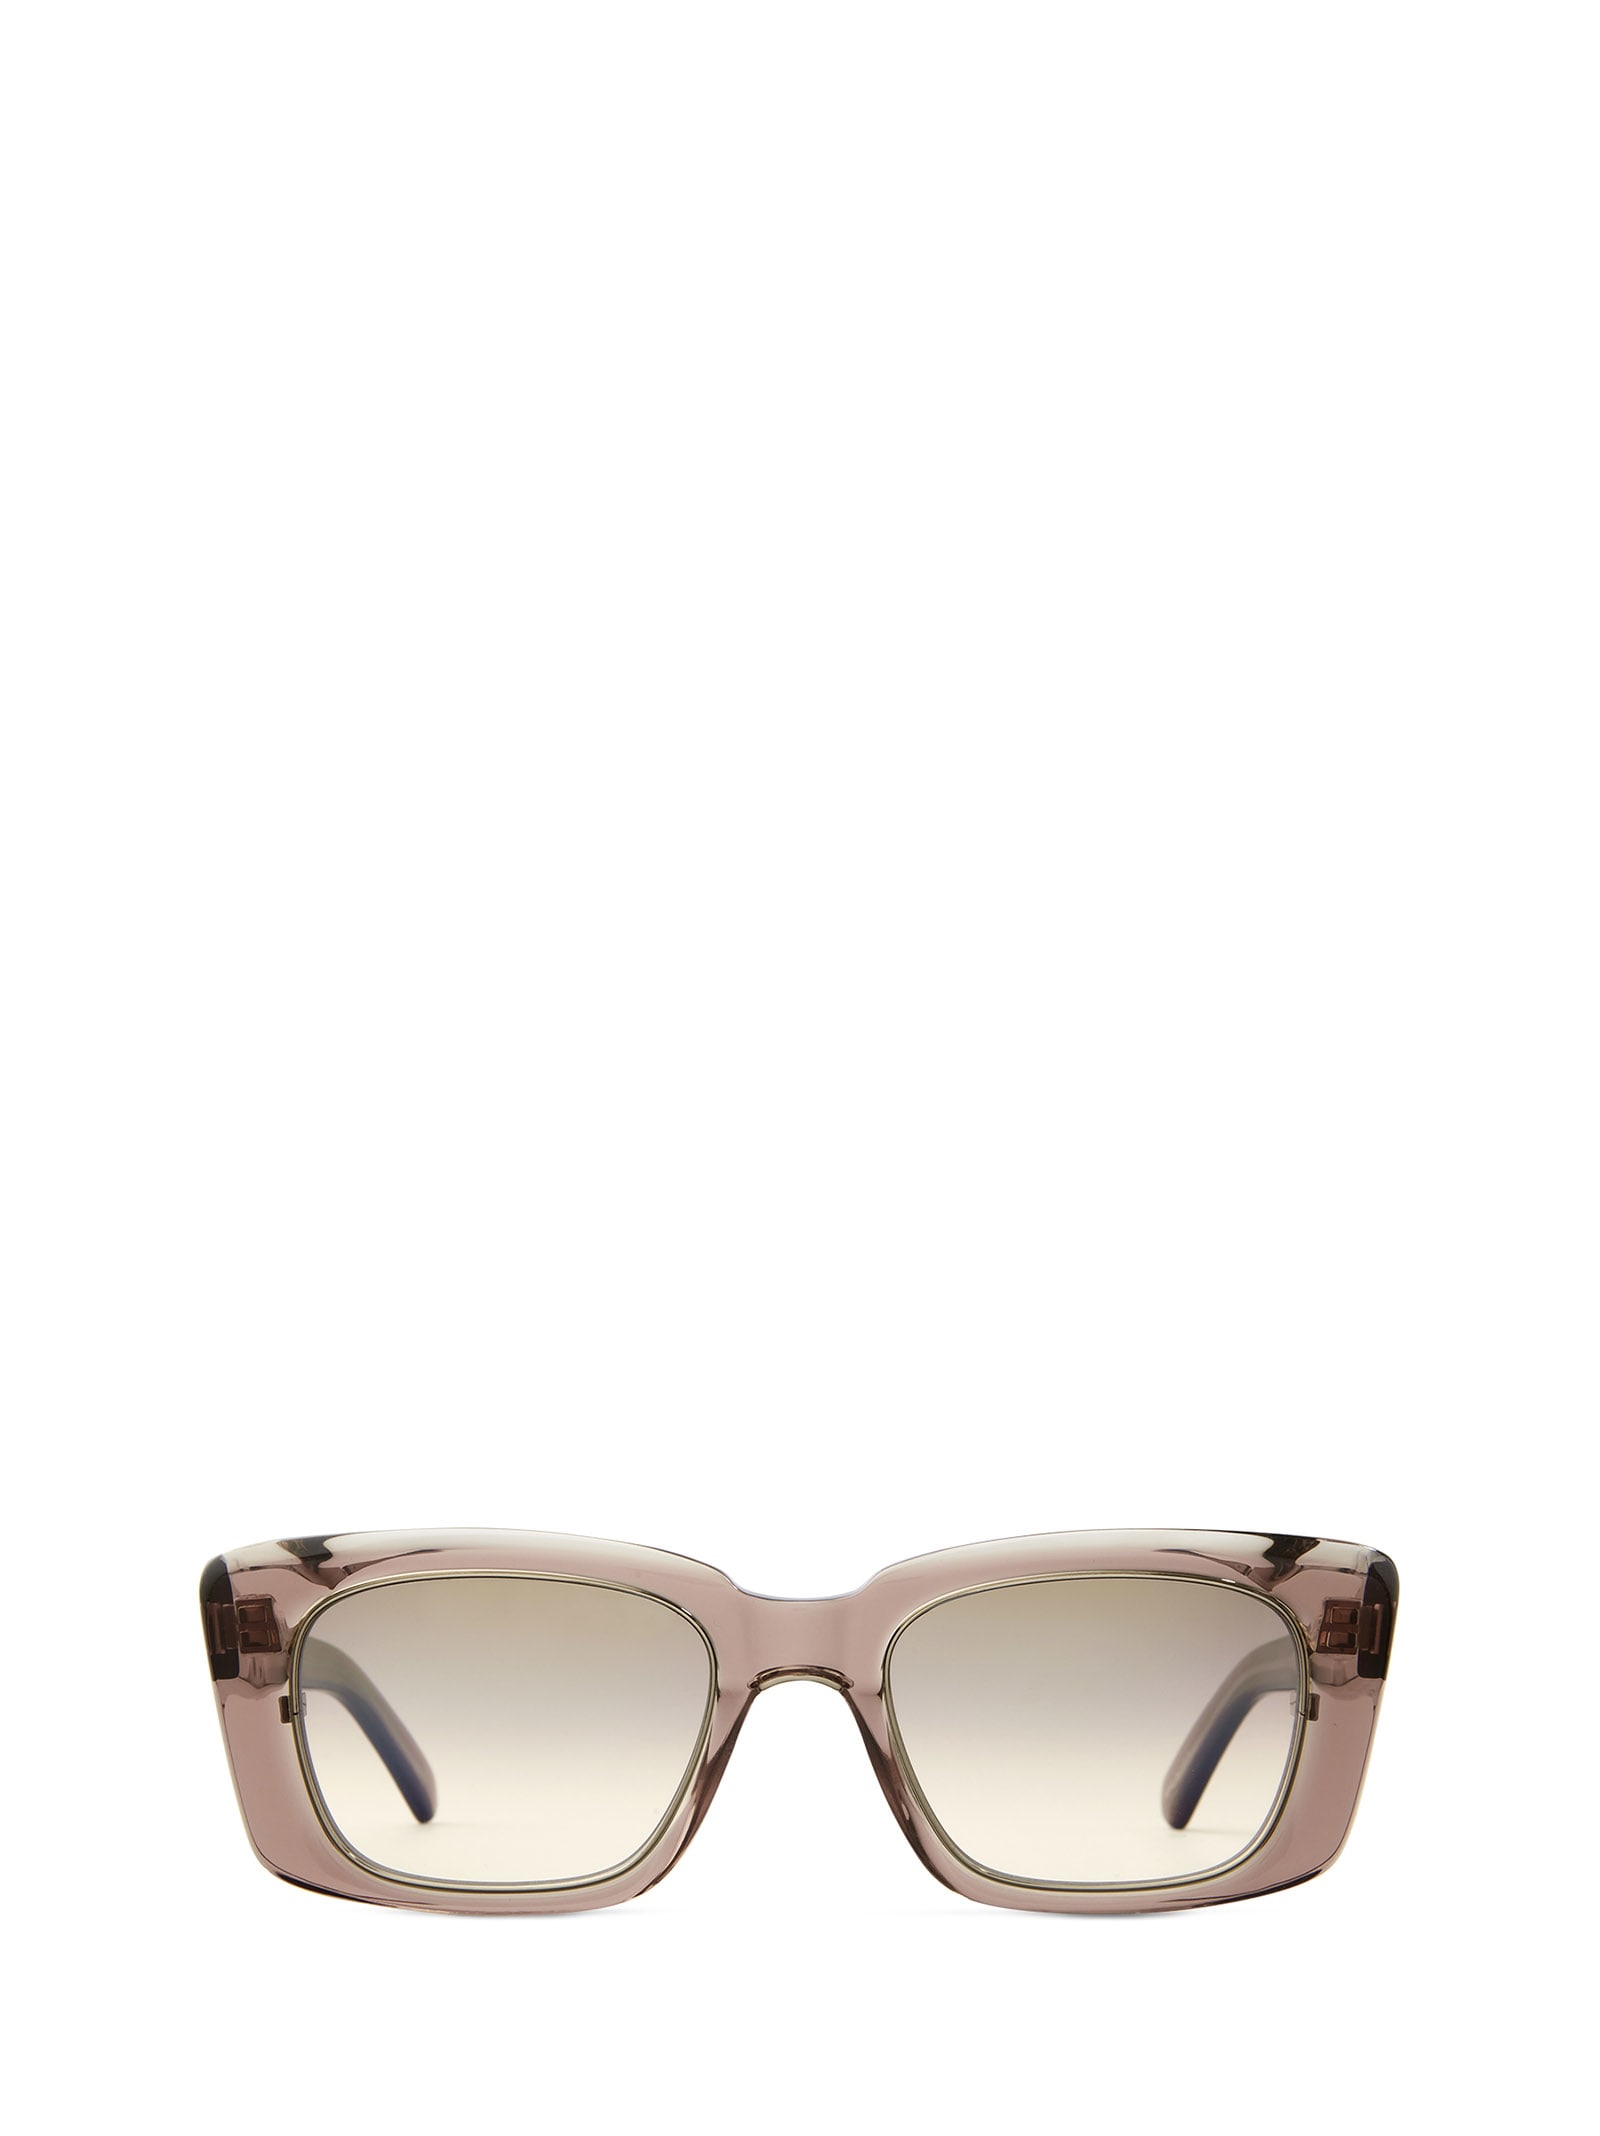 Shop Mr Leight Carman S Rose Clay-12k White Gold Sunglasses